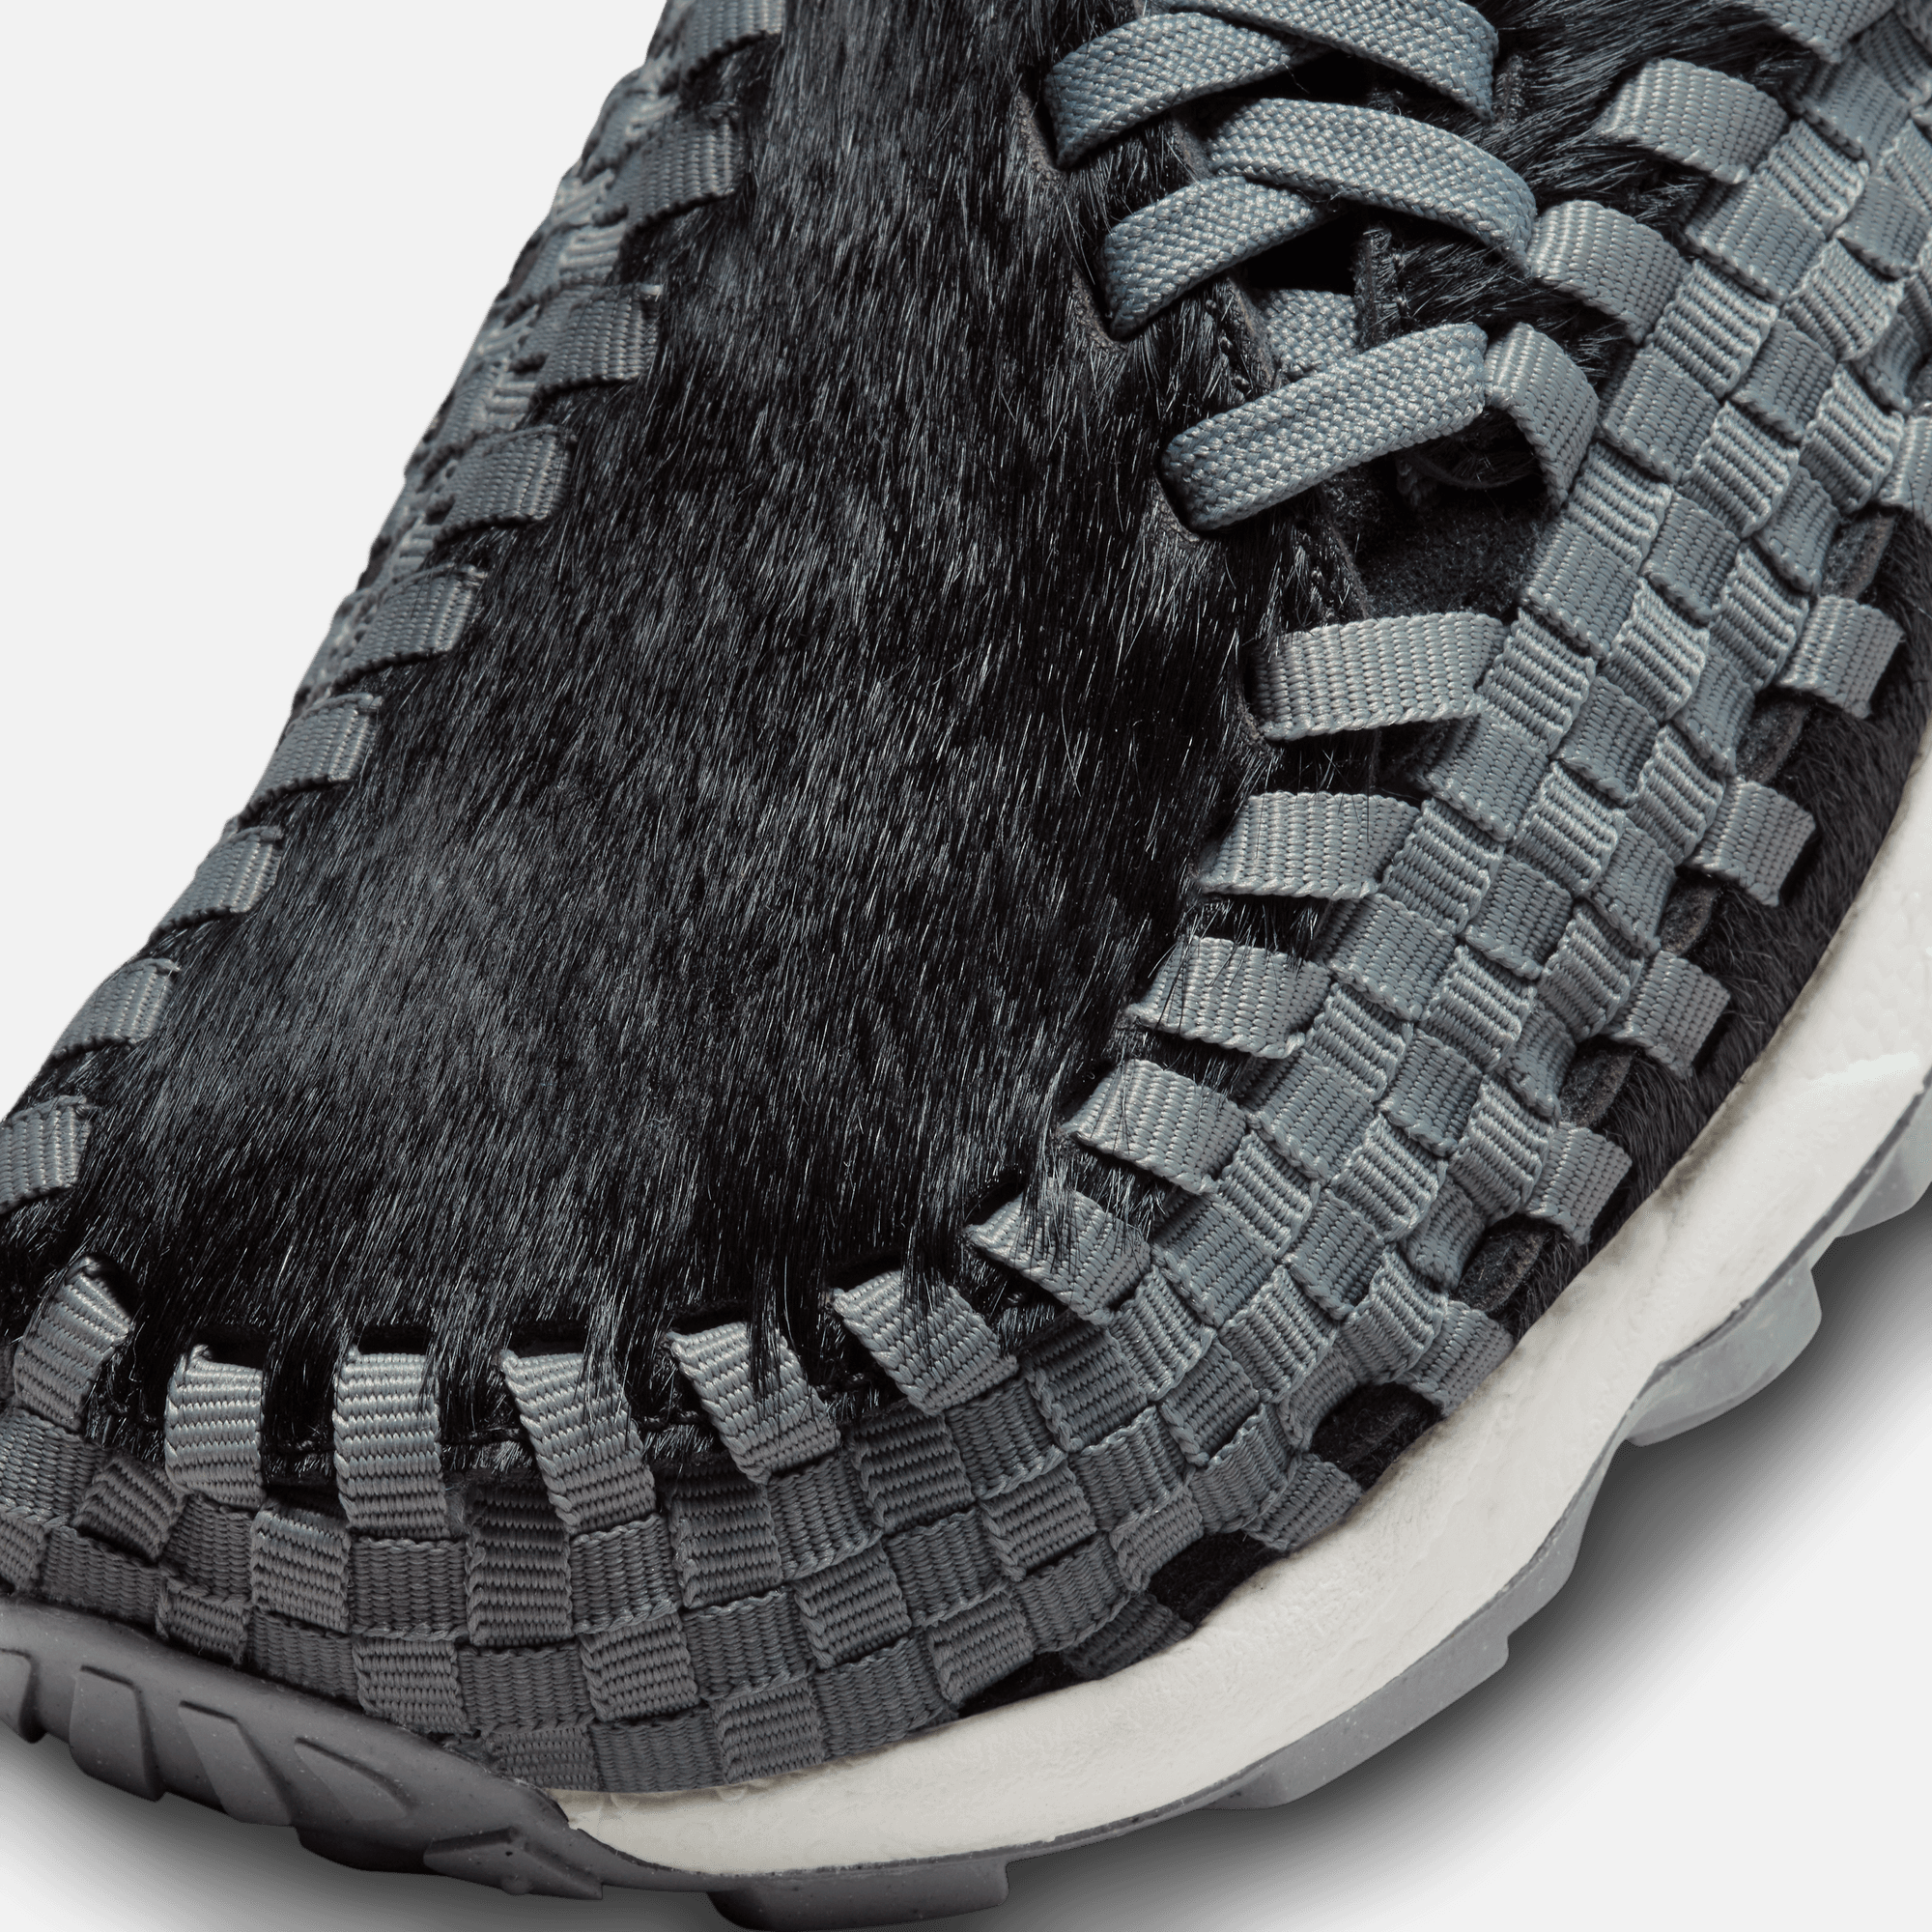 Nike Women's Air Footscape Woven Black Smoke Grey